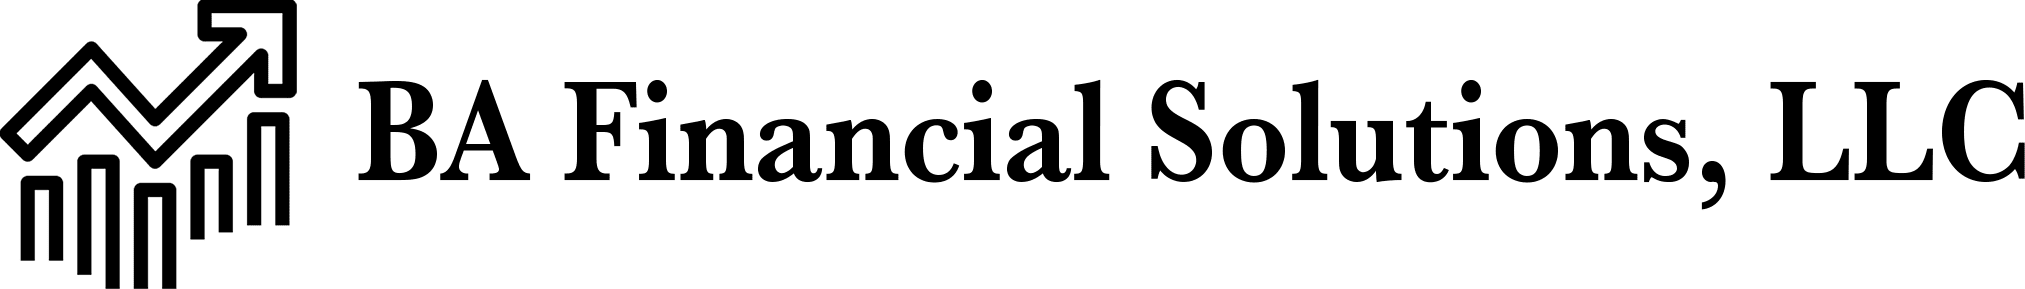 BA Financial Solutions, LLC